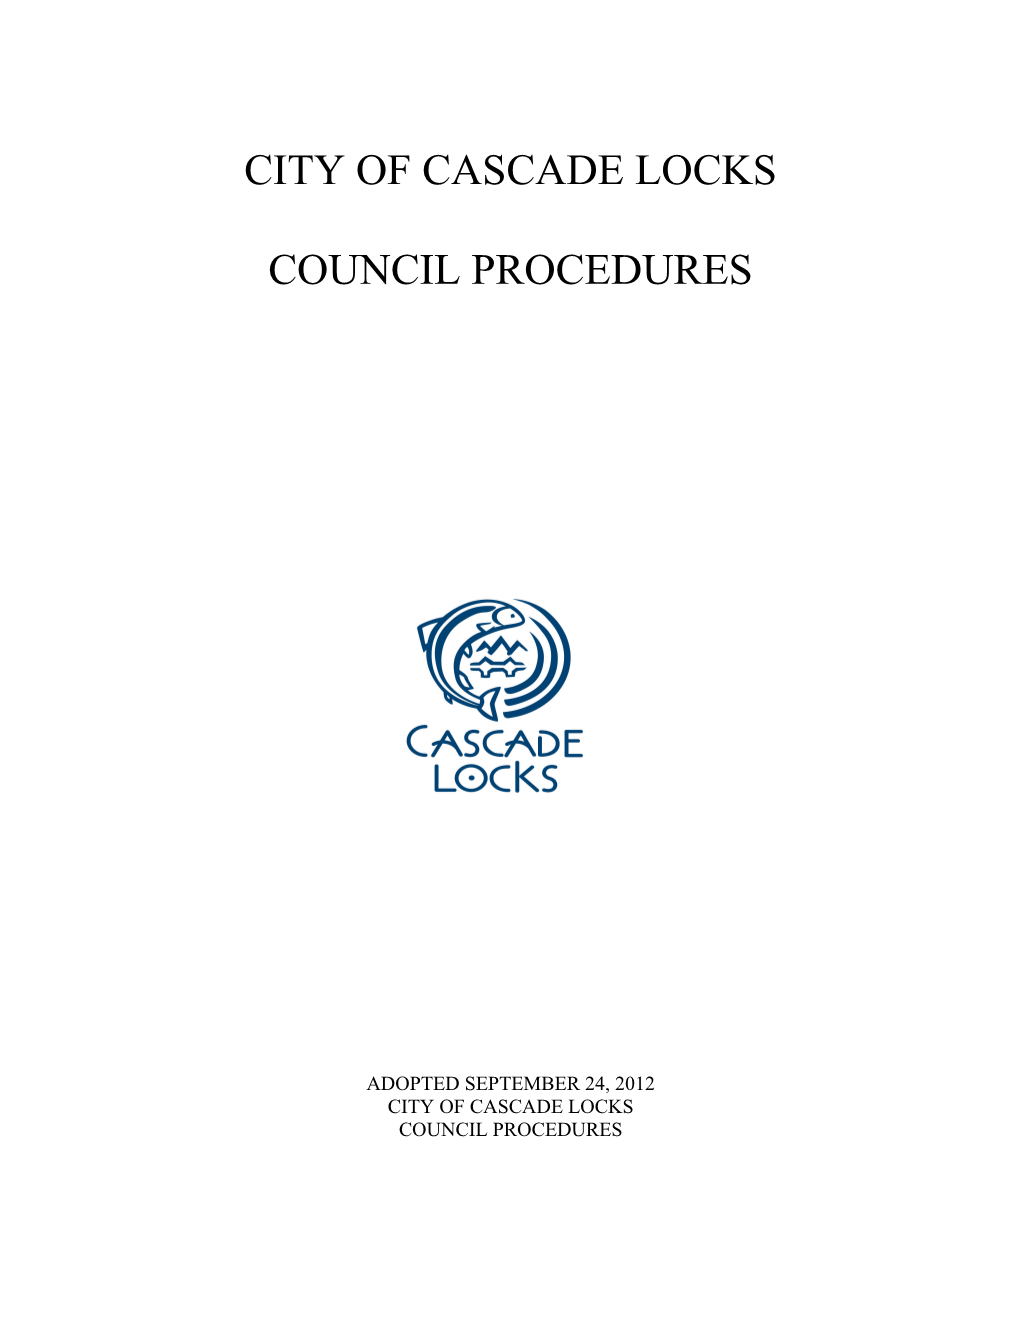 City of Cascade Locks